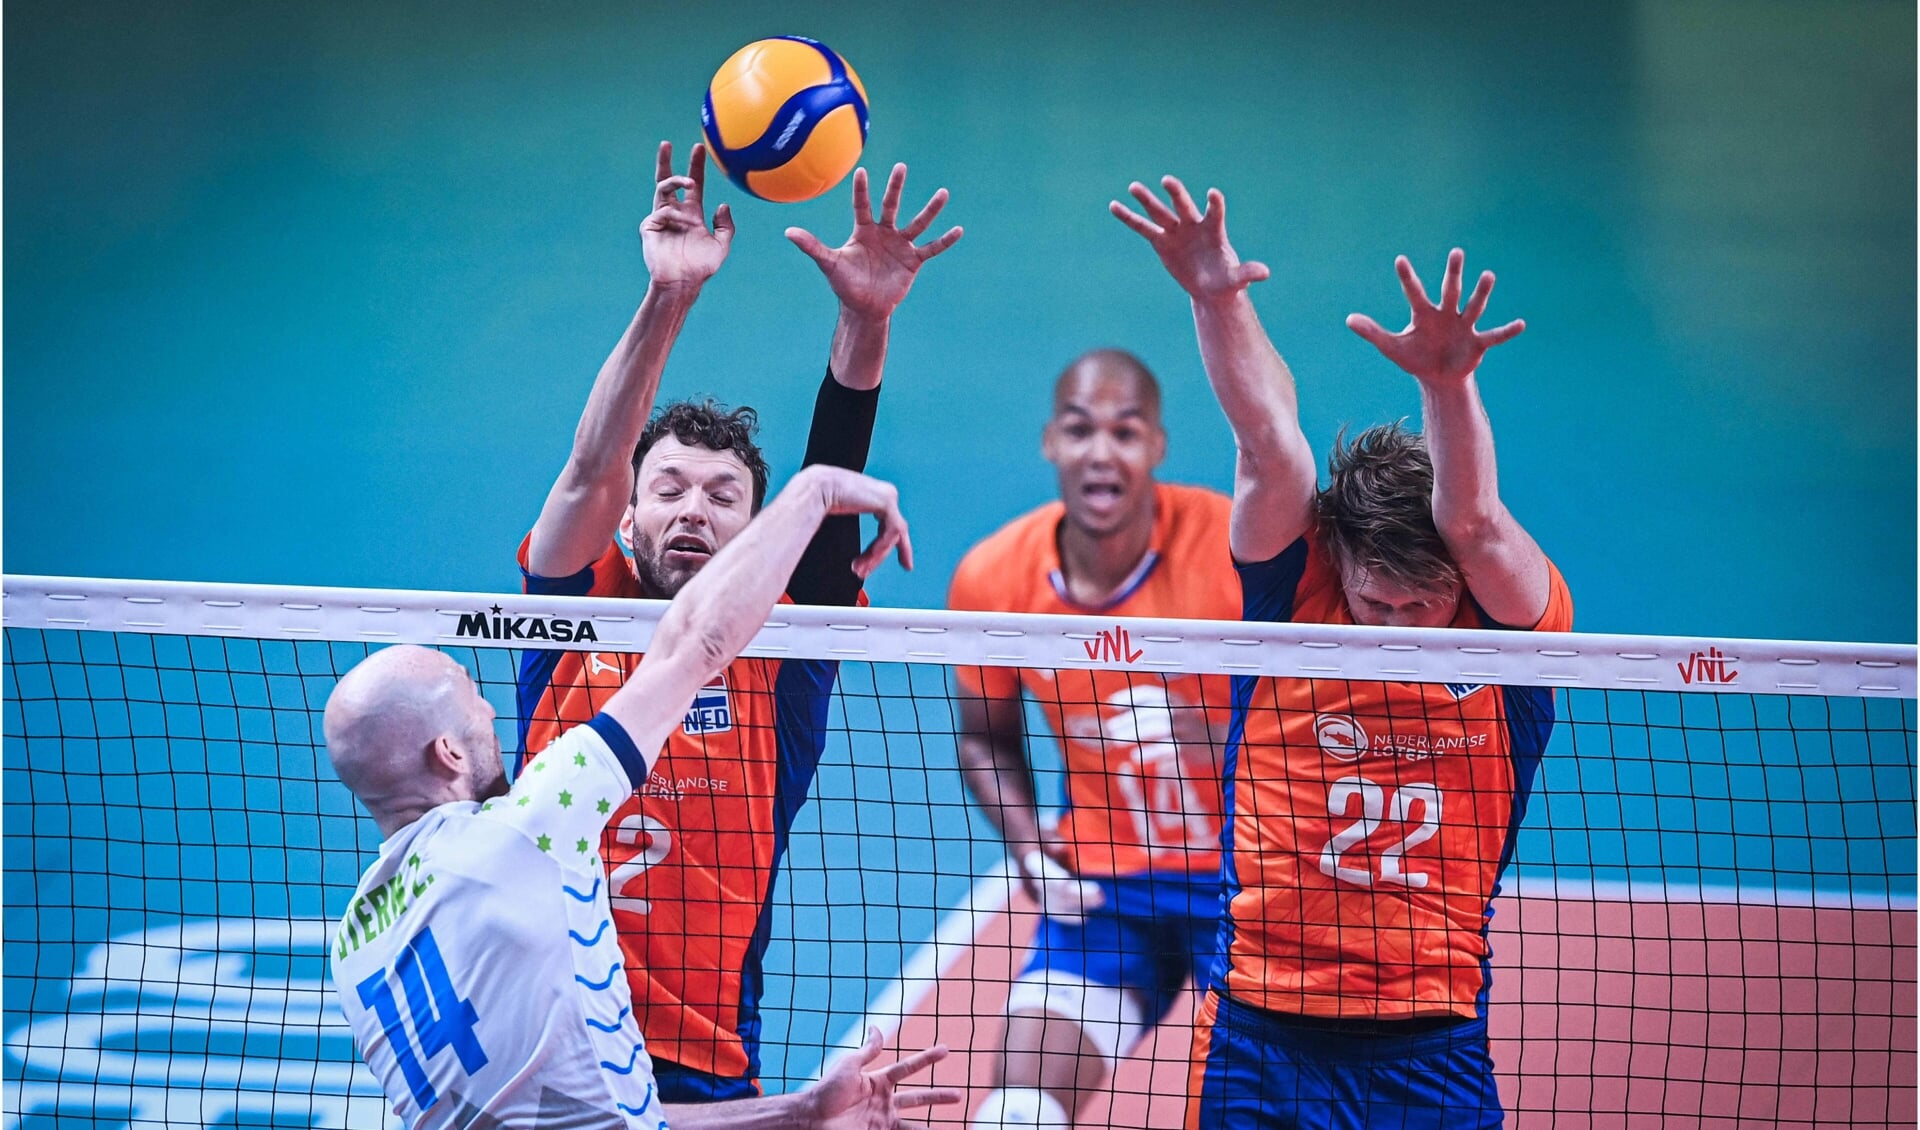 Nederland-Slovenië tijdens de Volleyball Nations League 2022. Foto:Nevobo/fotohoogendoorn.nl  